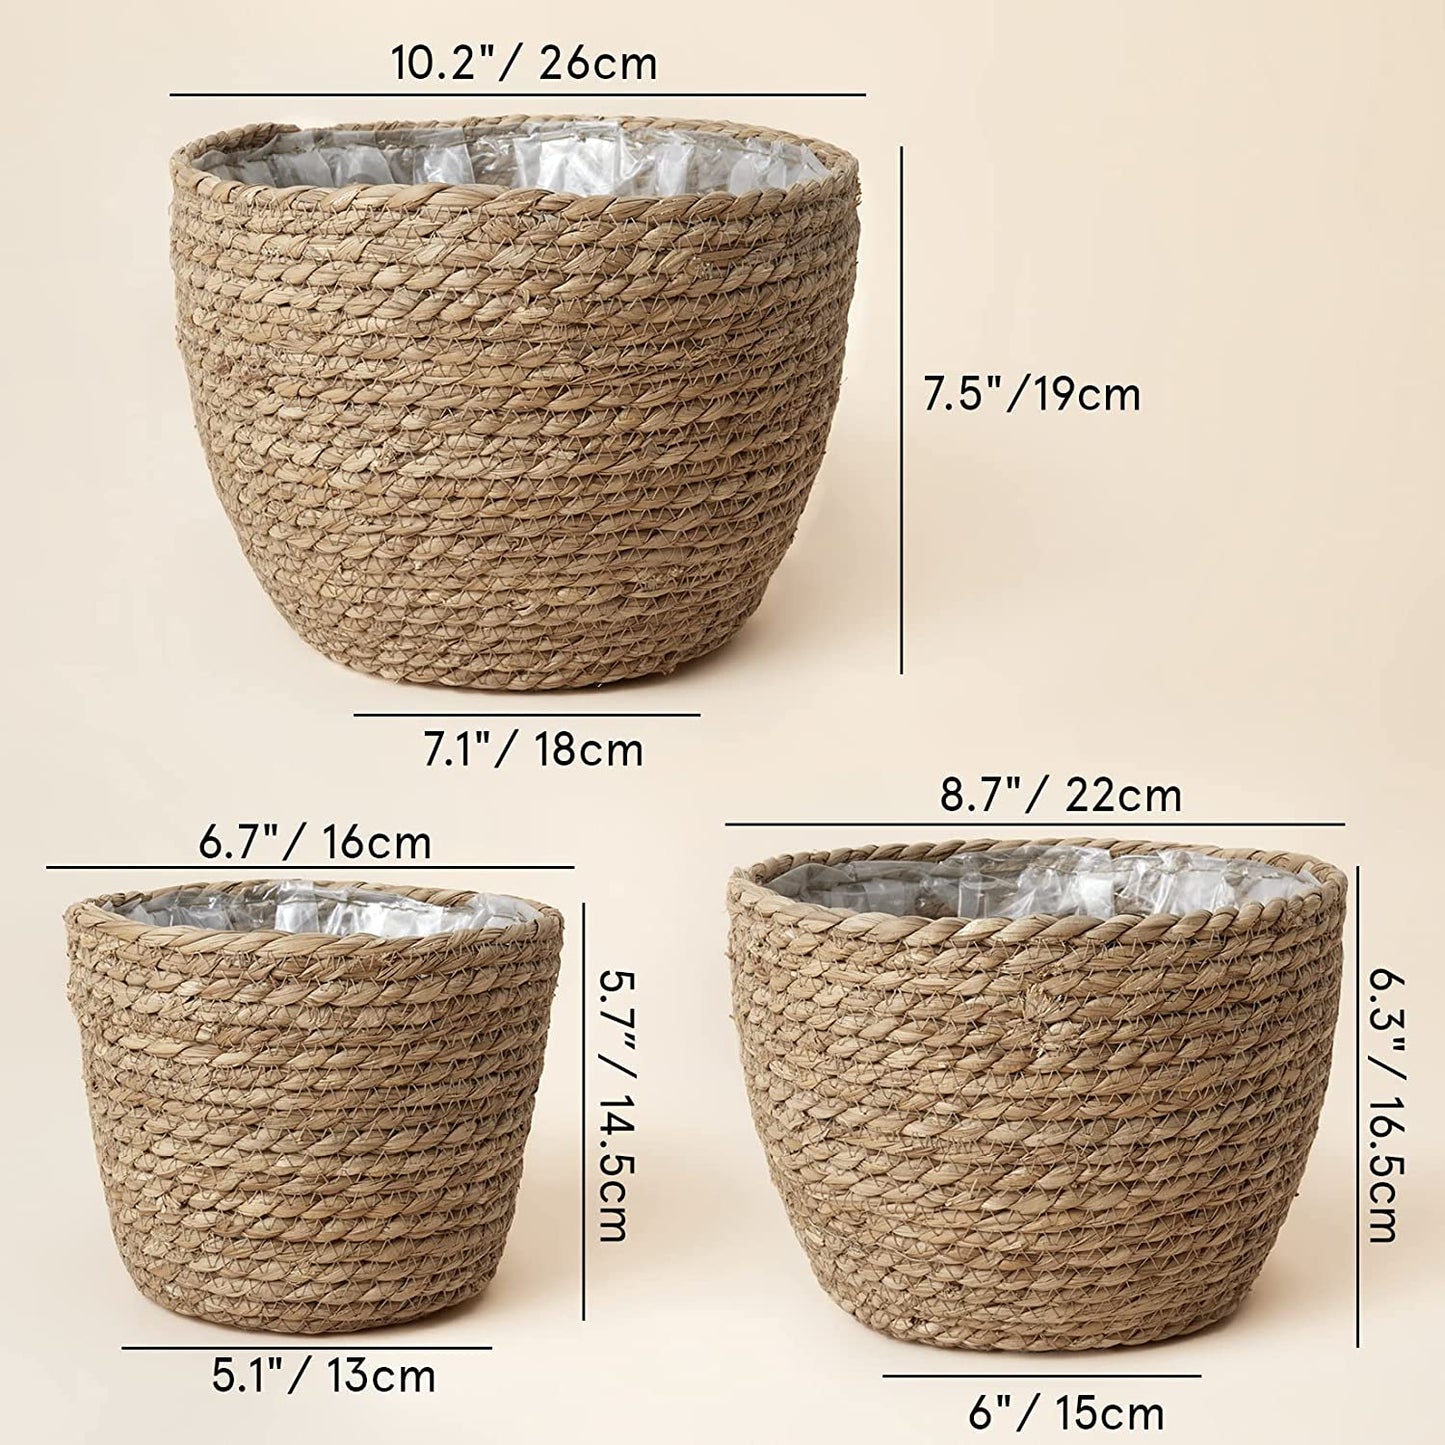 La Jolíe Muse Seagrass Planter Basket Indoor, Flower Pots Cover, Plant Containers, Natural(3-Pack)